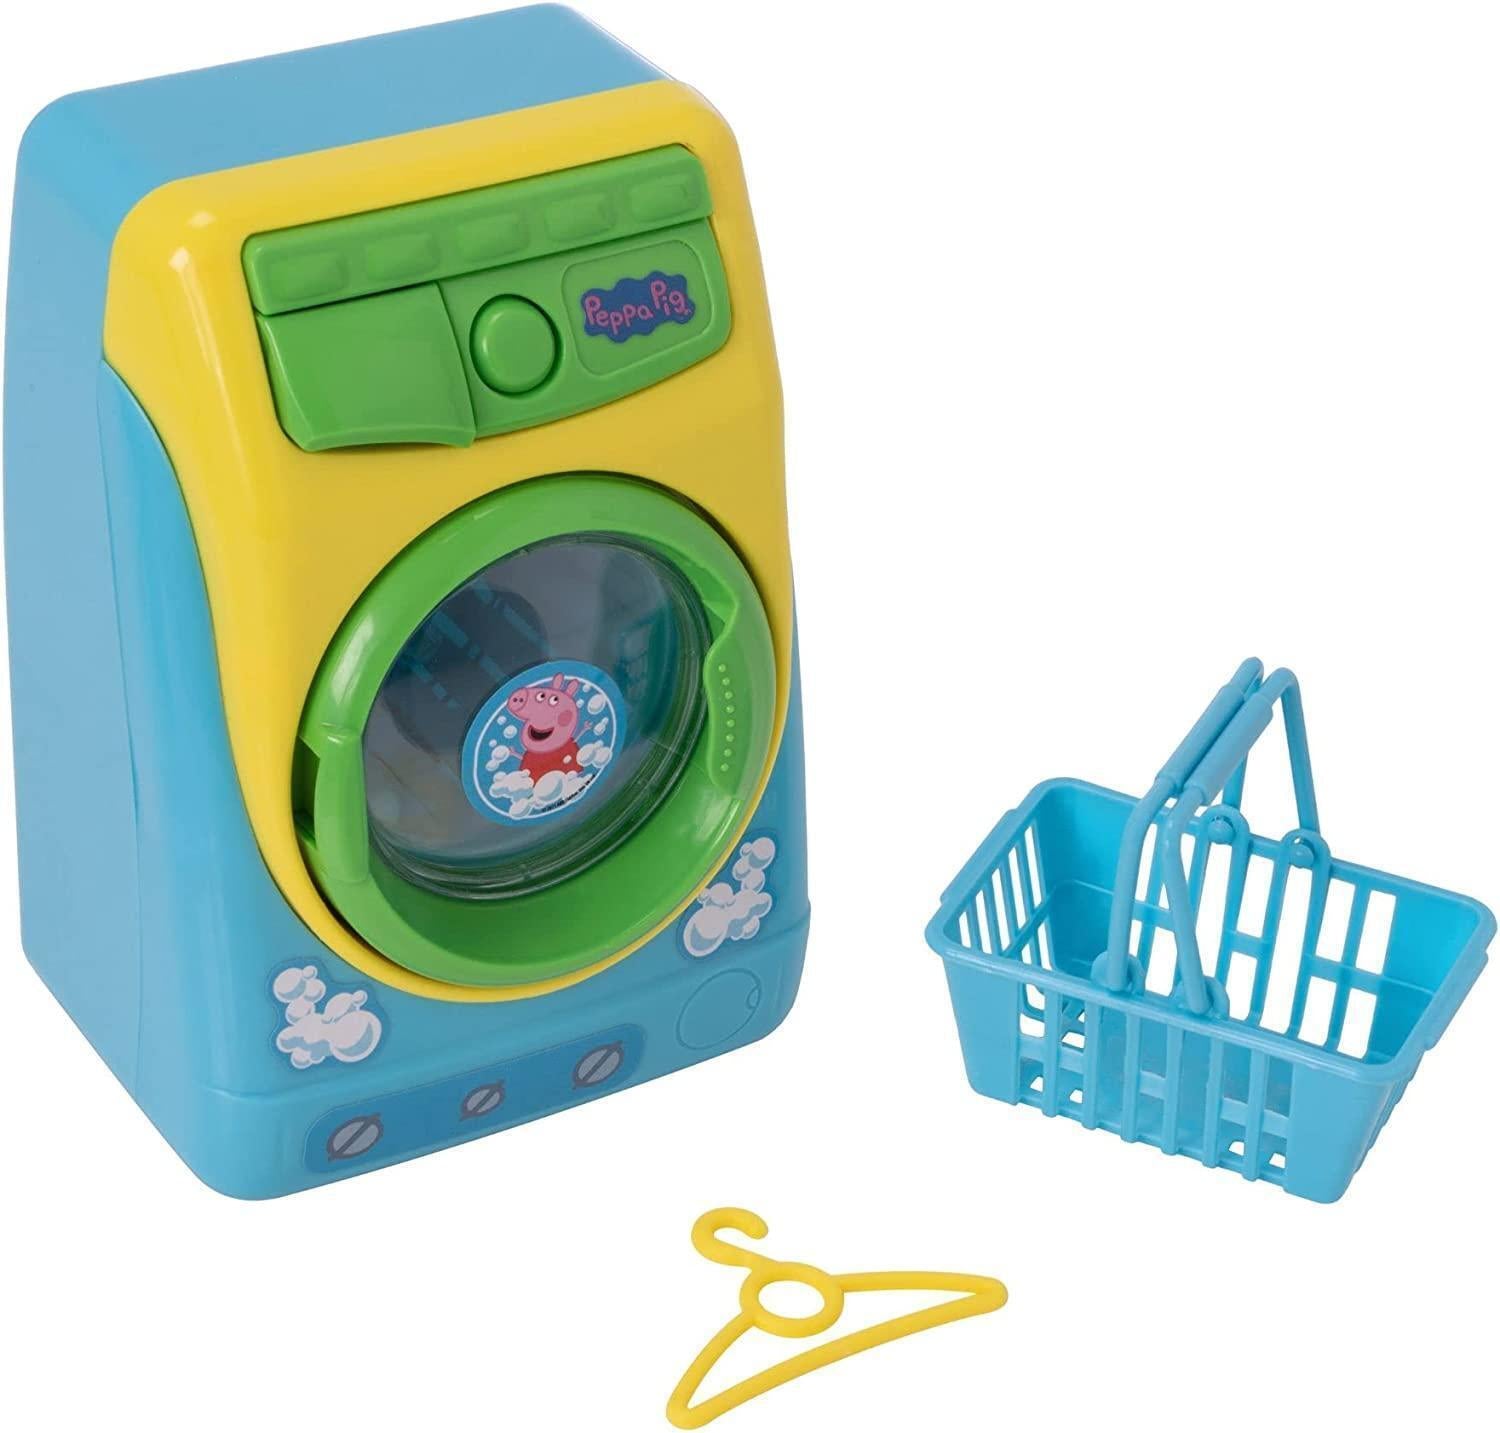 Peppa Pig Washing Machine With Lights & Sound